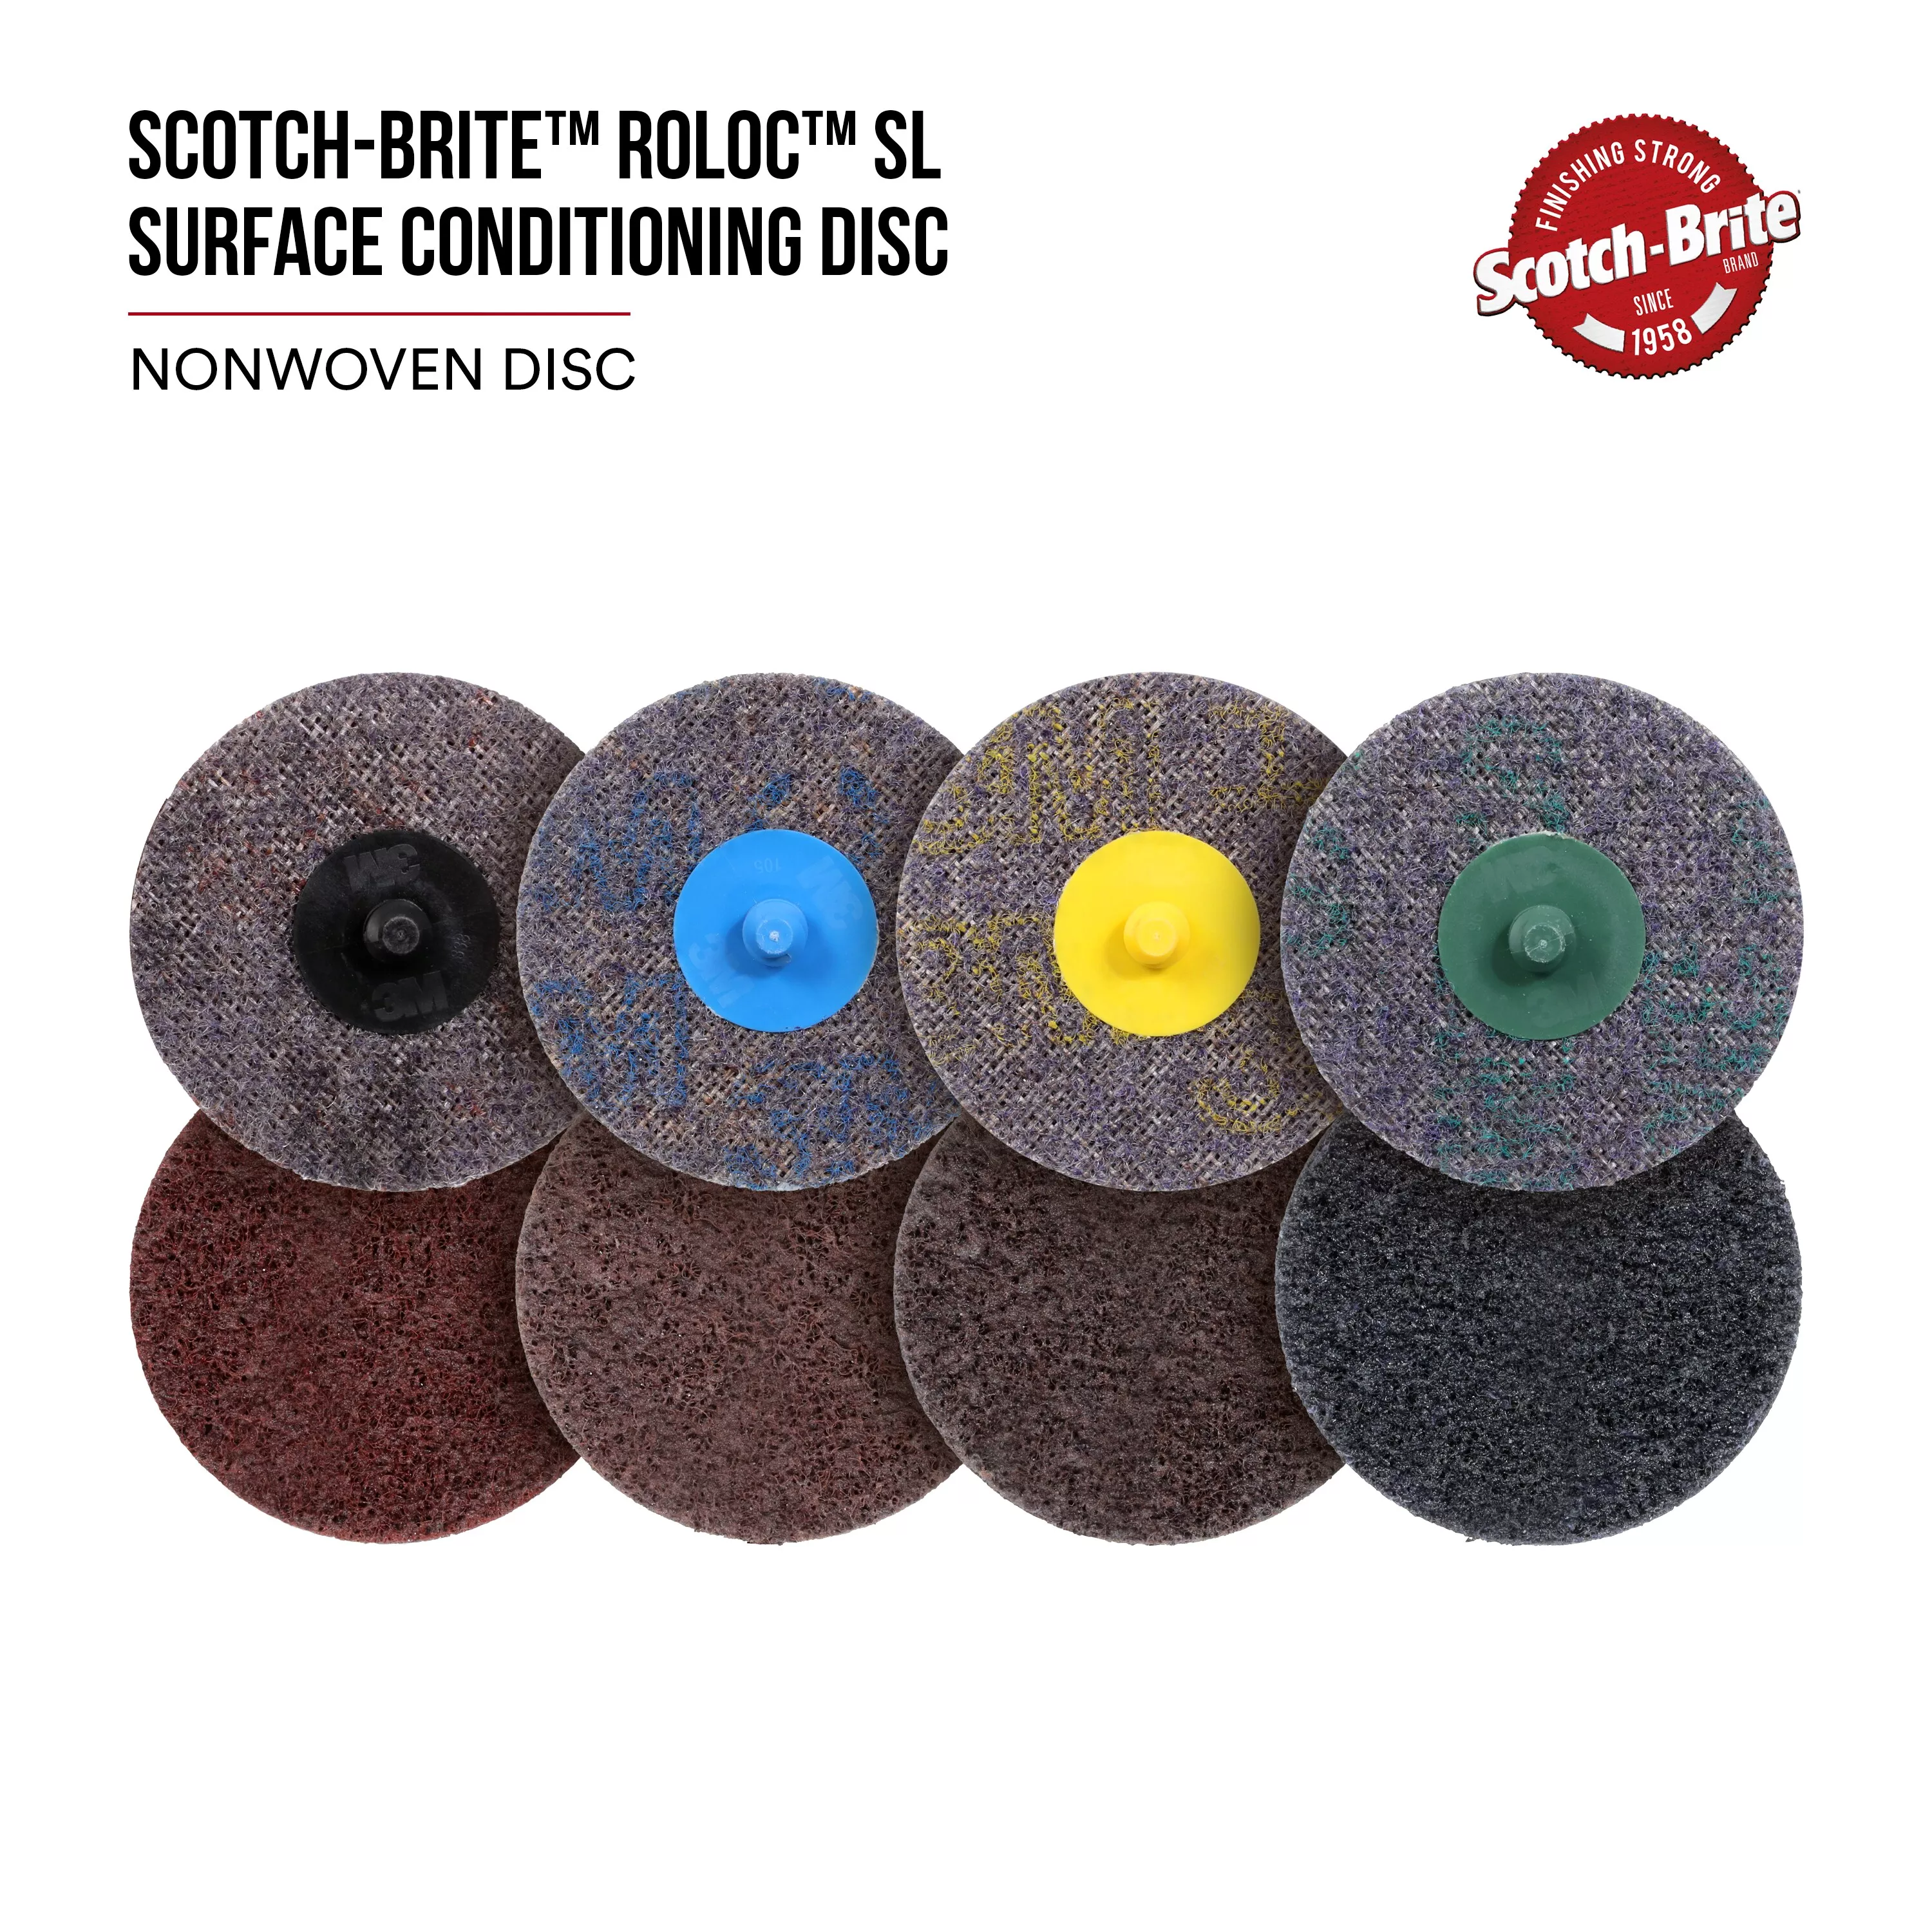 SKU 7000121086 | Scotch-Brite™ Roloc™ SL Surface Conditioning Disc